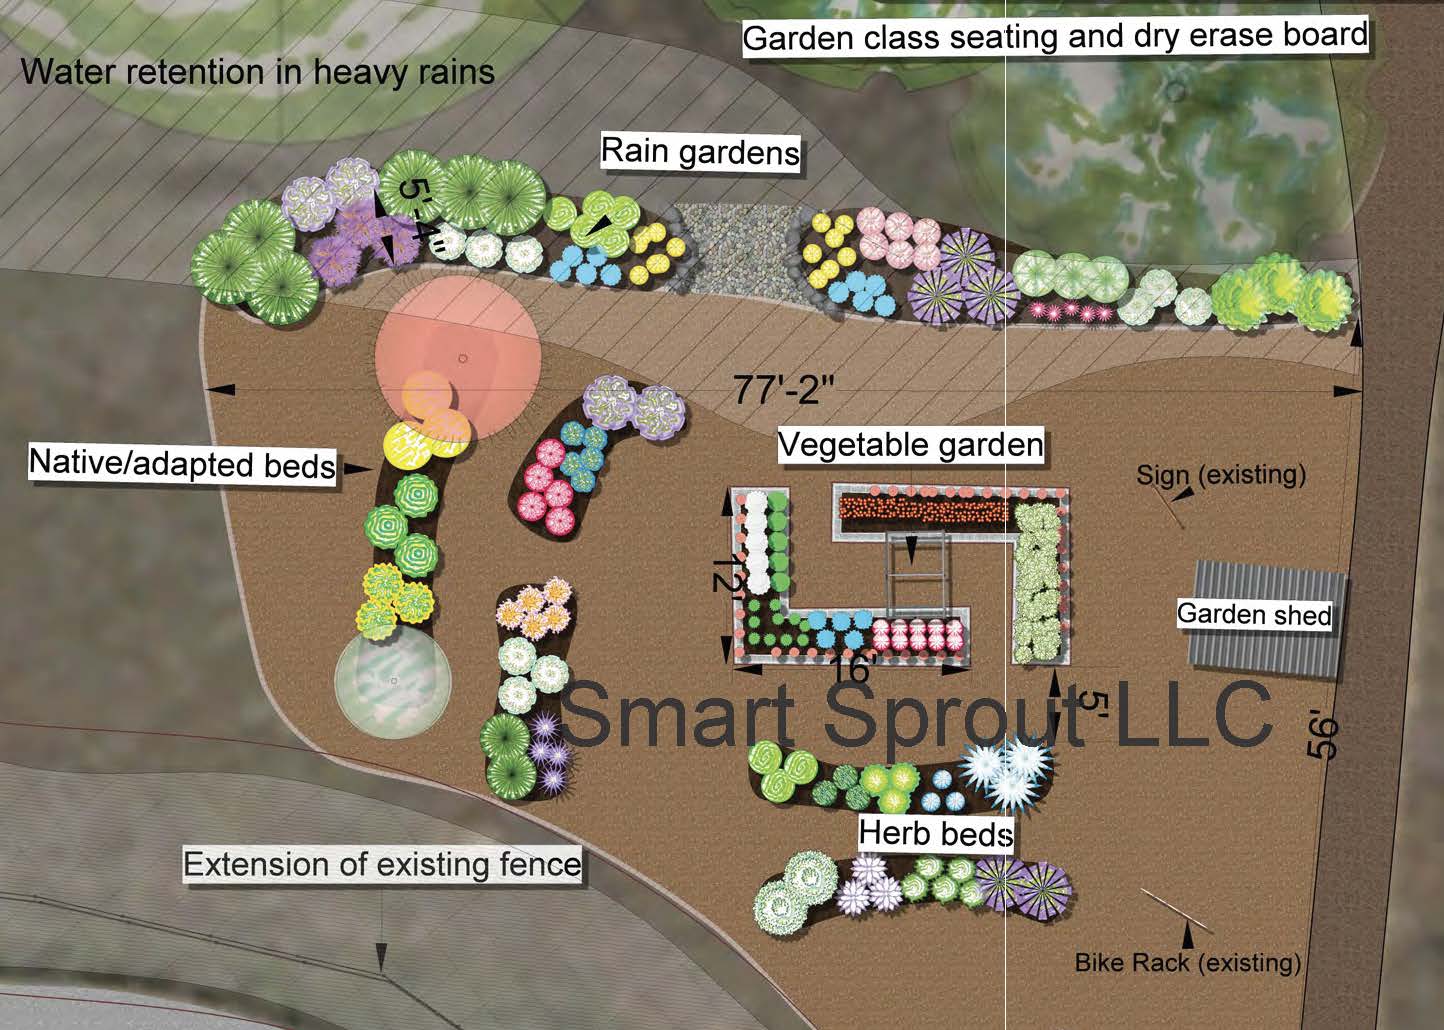 Design plan for school garden